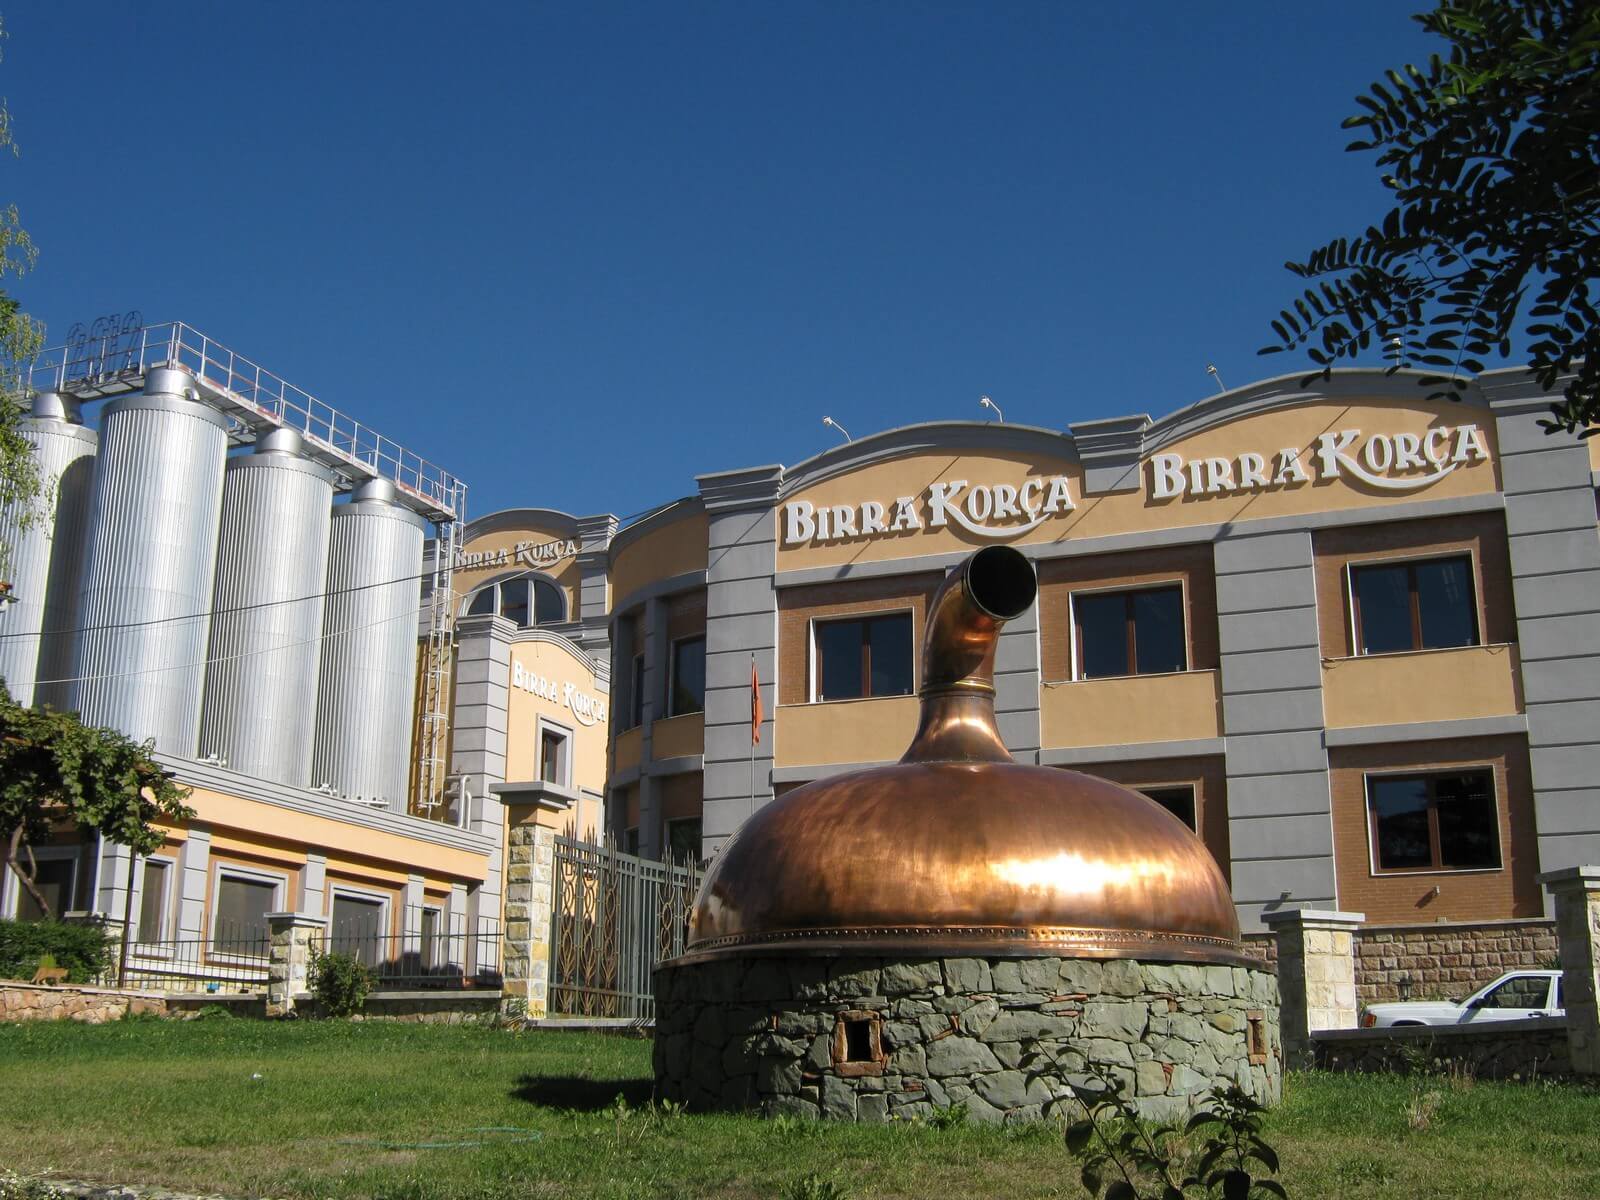 Foto: Korca Brauerei in Korca - Lupe Reisen